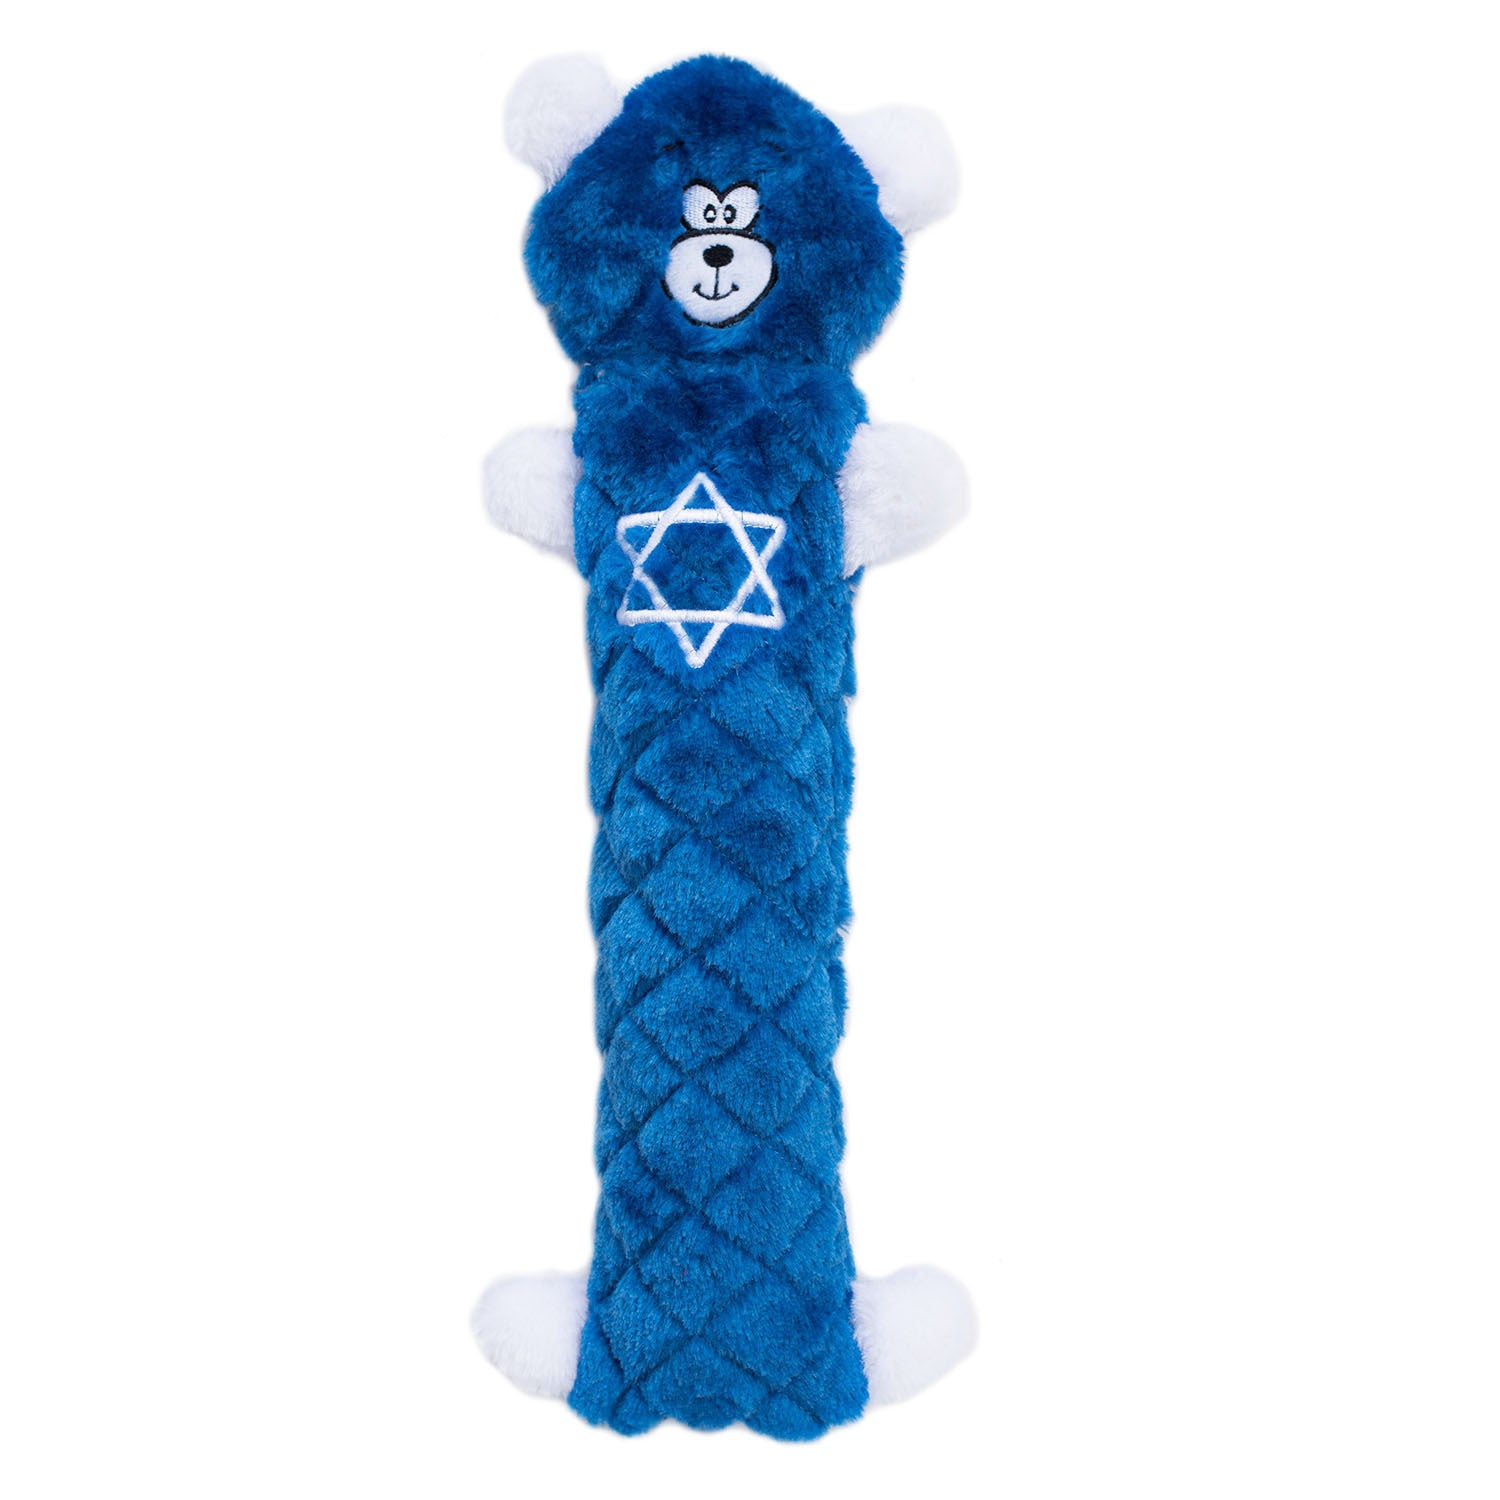 ZippyPaws Hanukkah Jigglerz  Blue Bear  |  Shakeable Squeaky Plush Toy